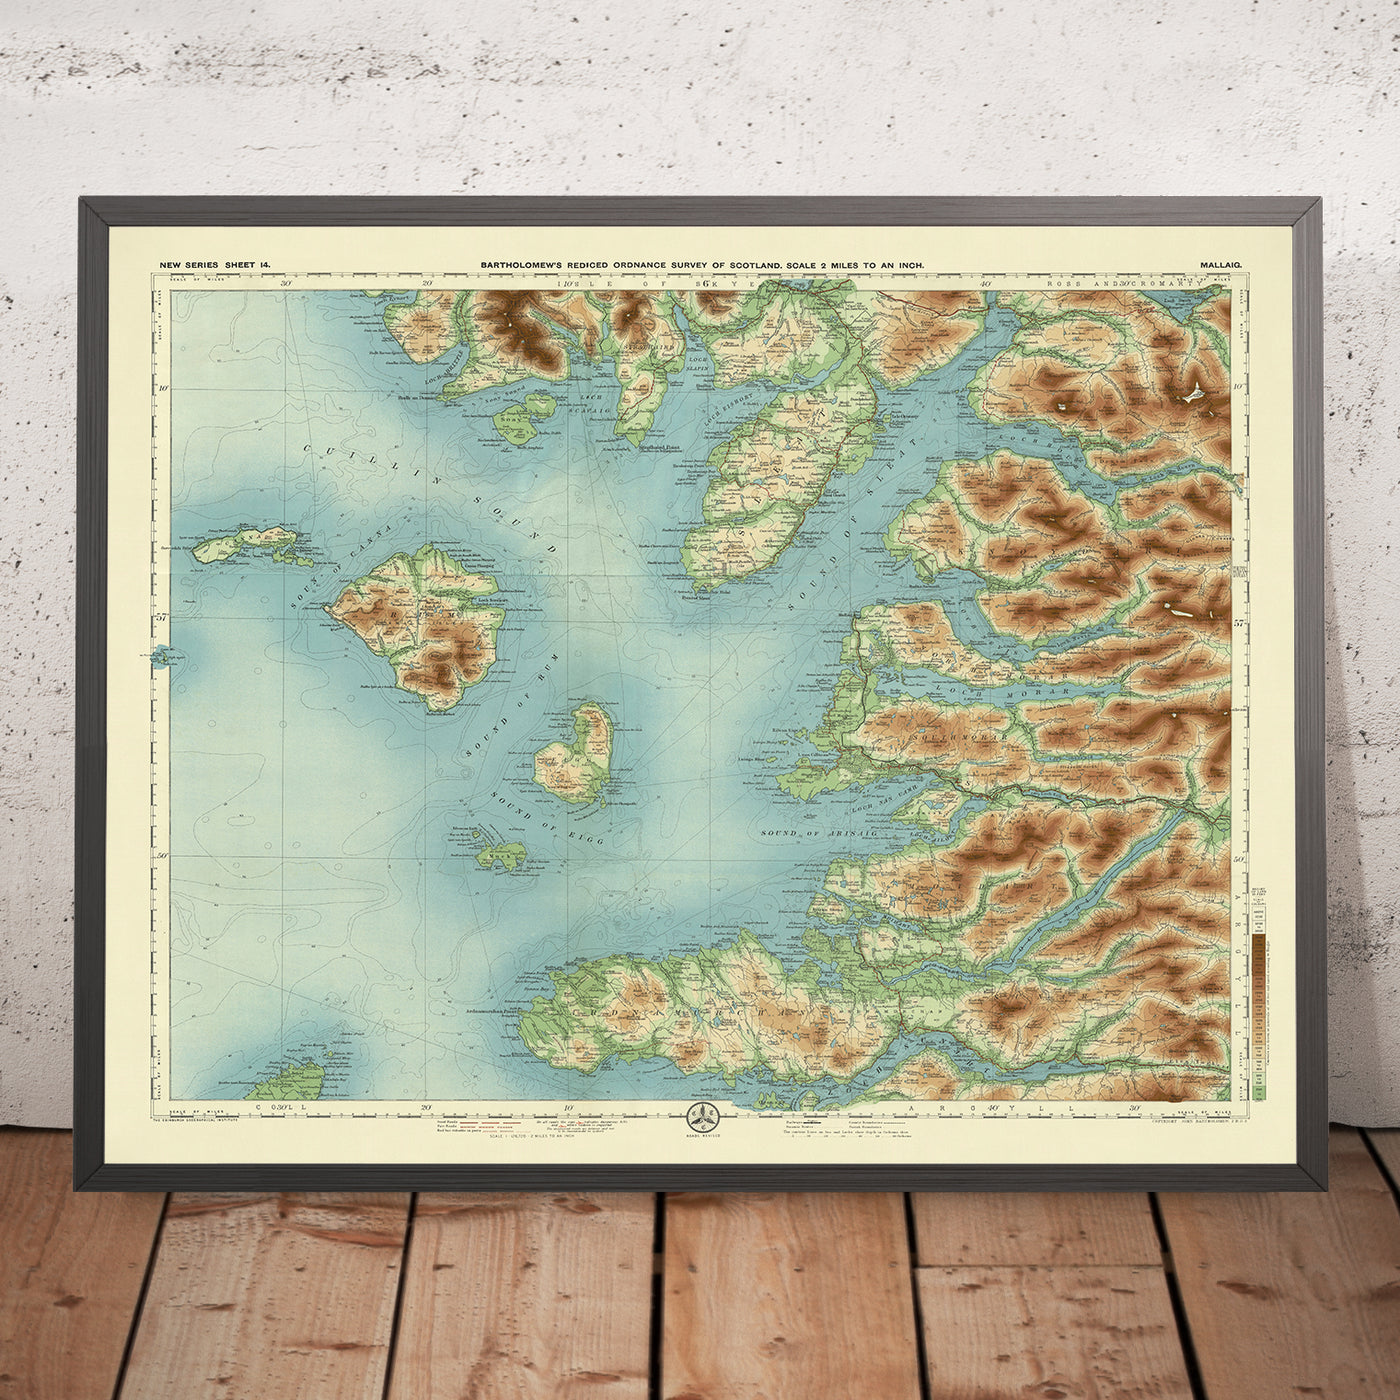 Ancienne carte OS de Mallaig, Inverness-shire par Bartholomew, 1901 : île de Skye, Loch Morar, Cuillin Hills, Glenfinnan, Sound of Sleat, Knoydart